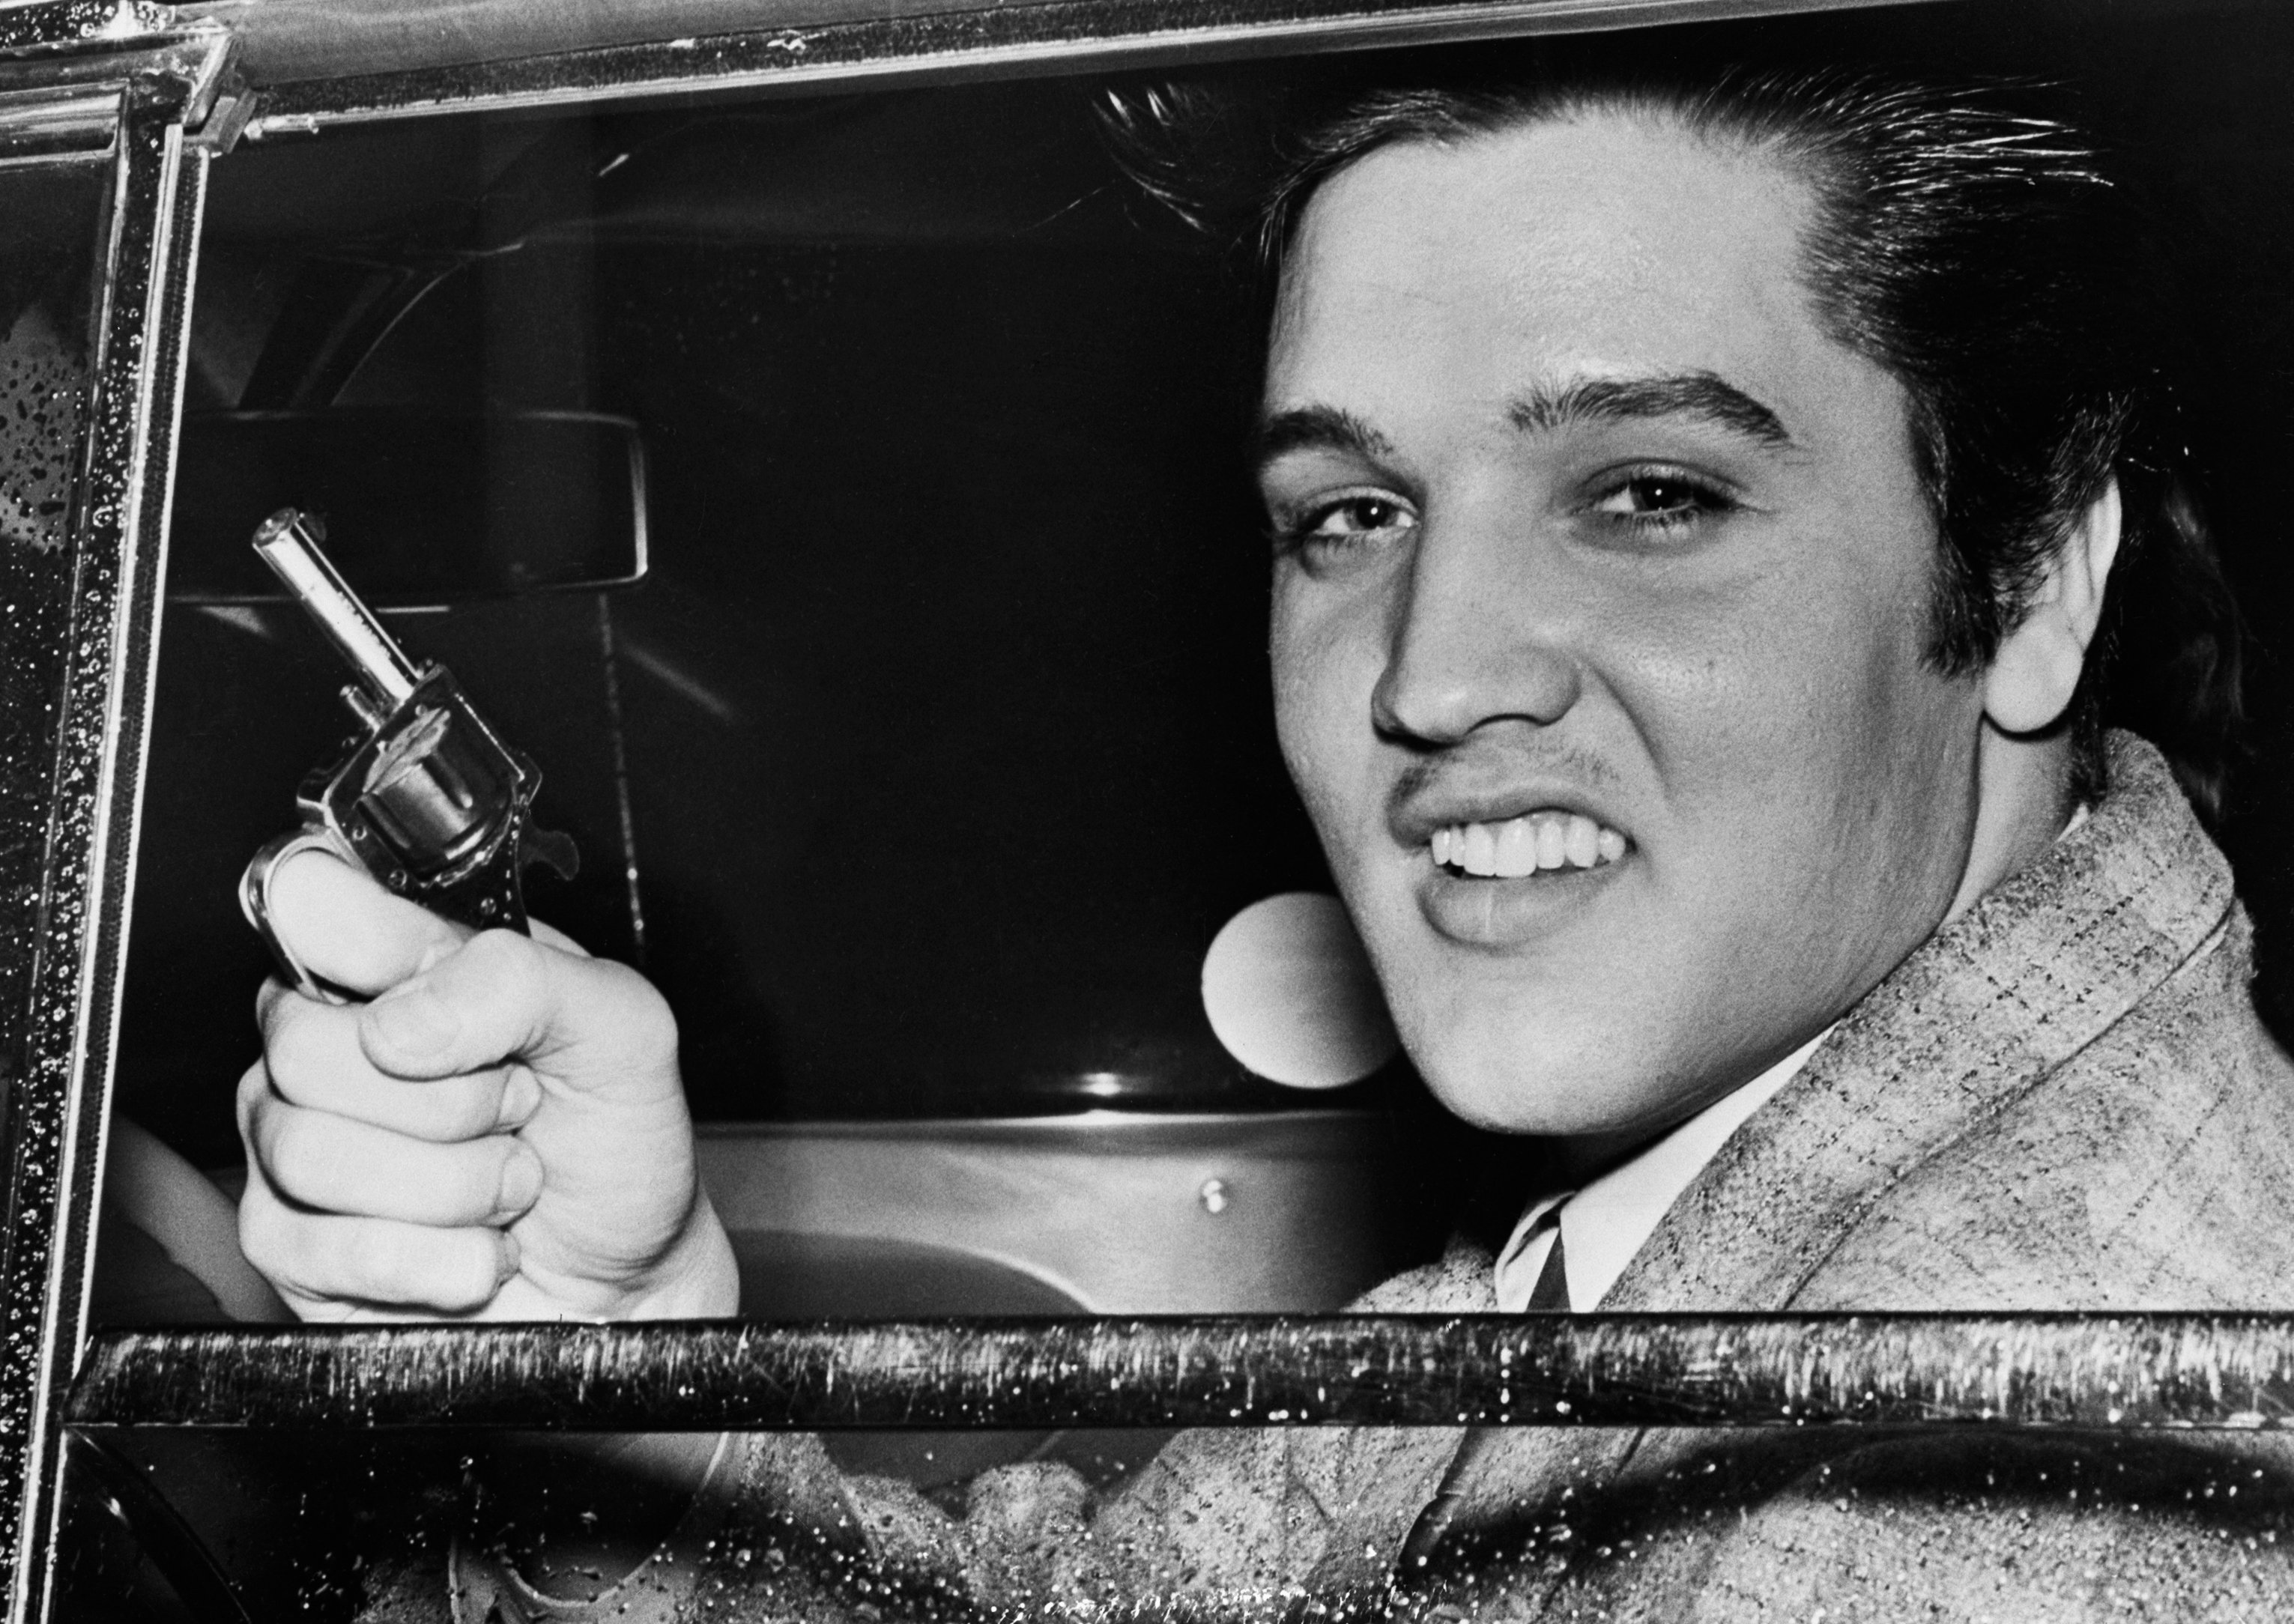 Elvis Presley with a toy gun